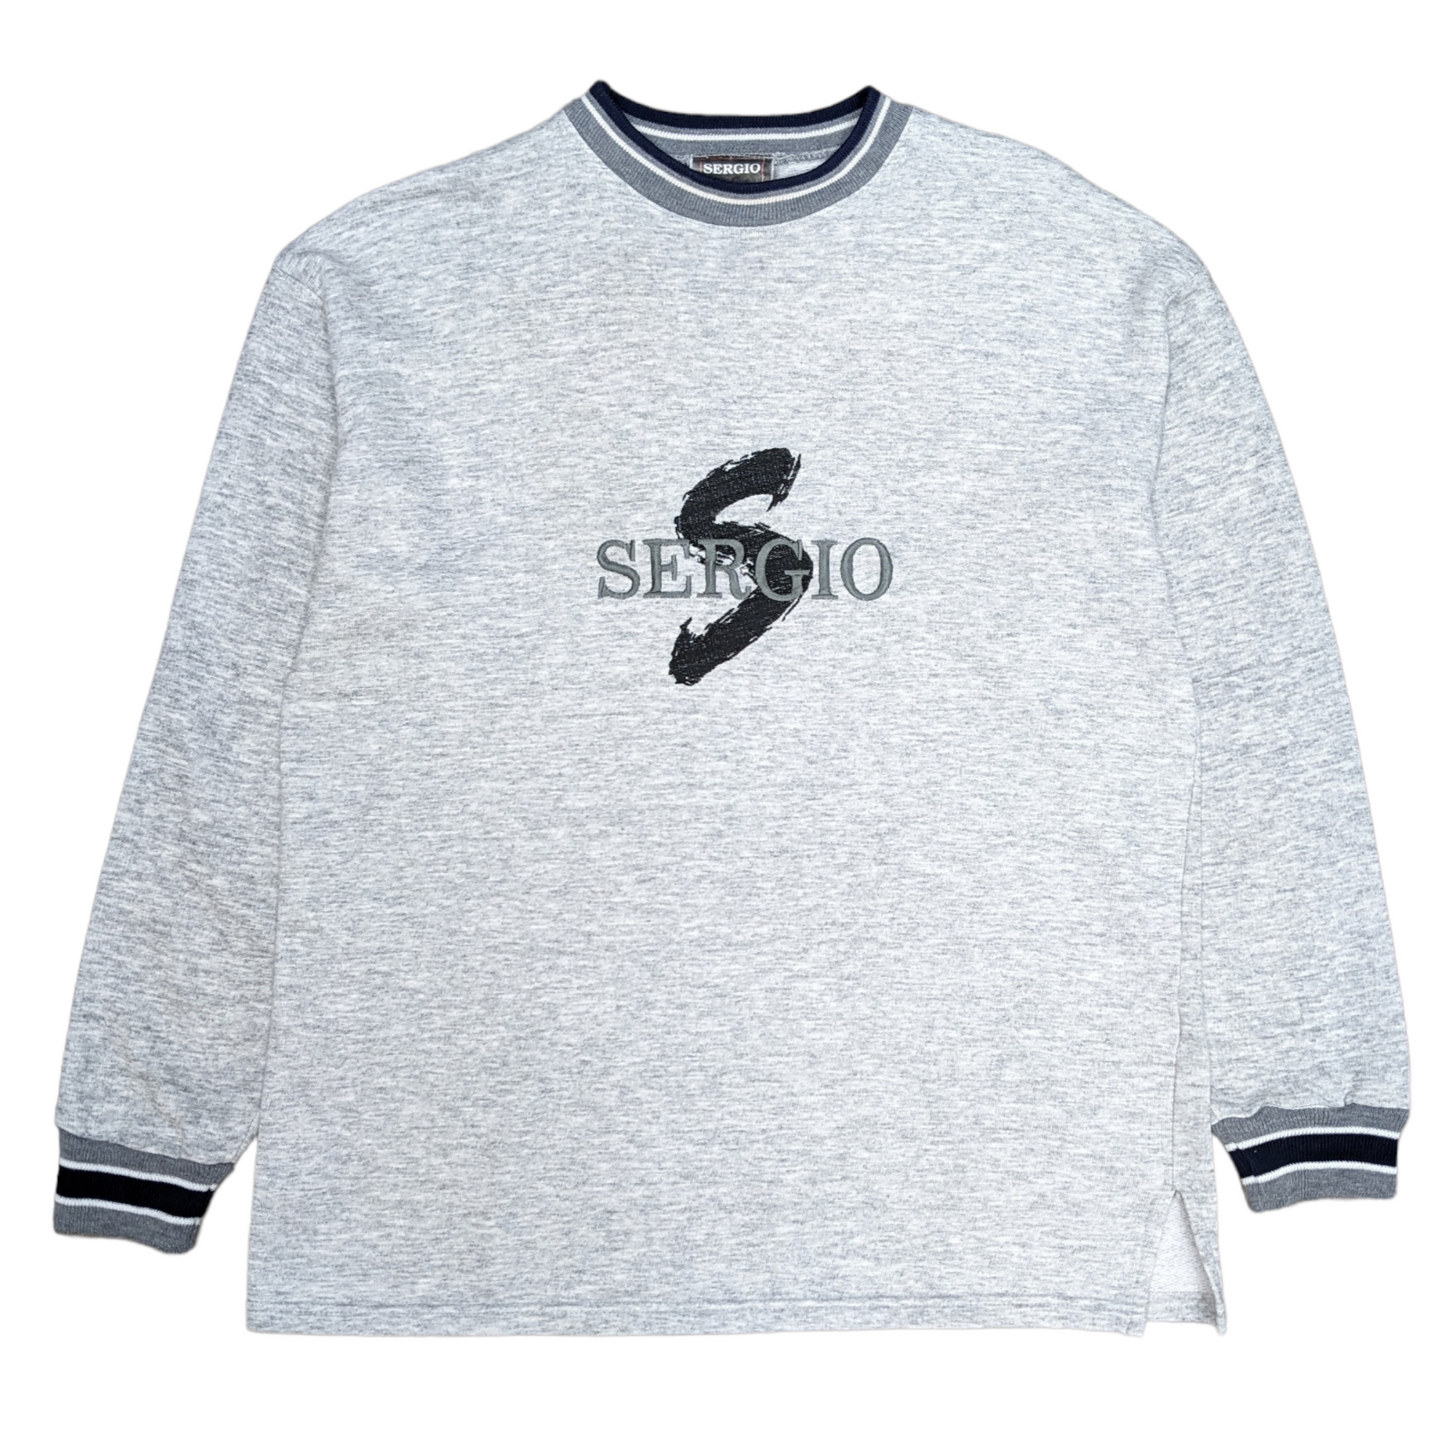 90's Sergio Sweatshirt Size L